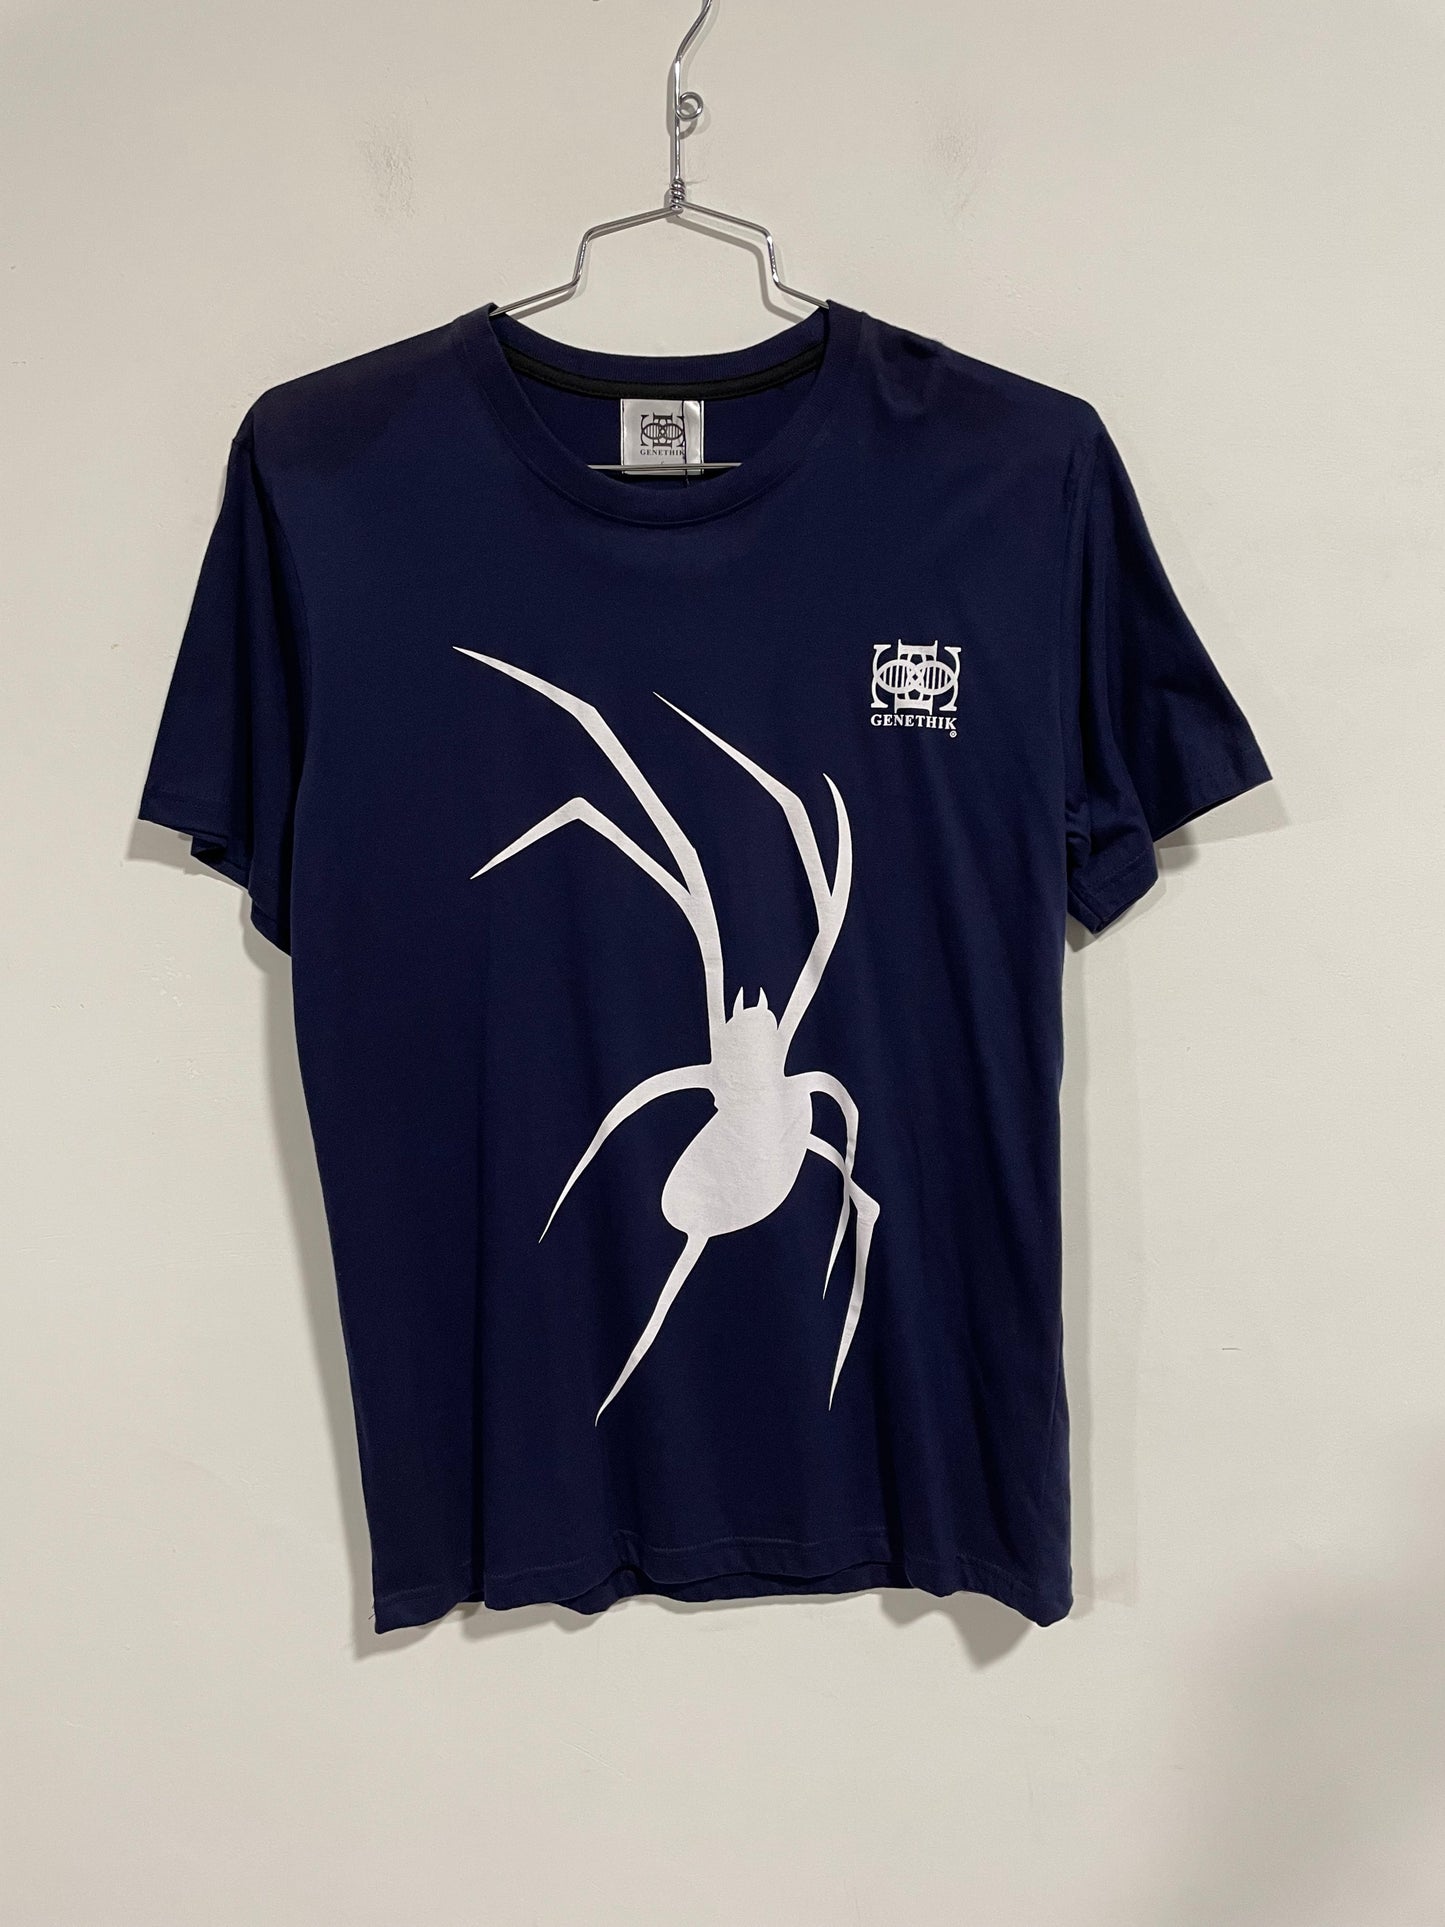 T shirt Genethik Spider